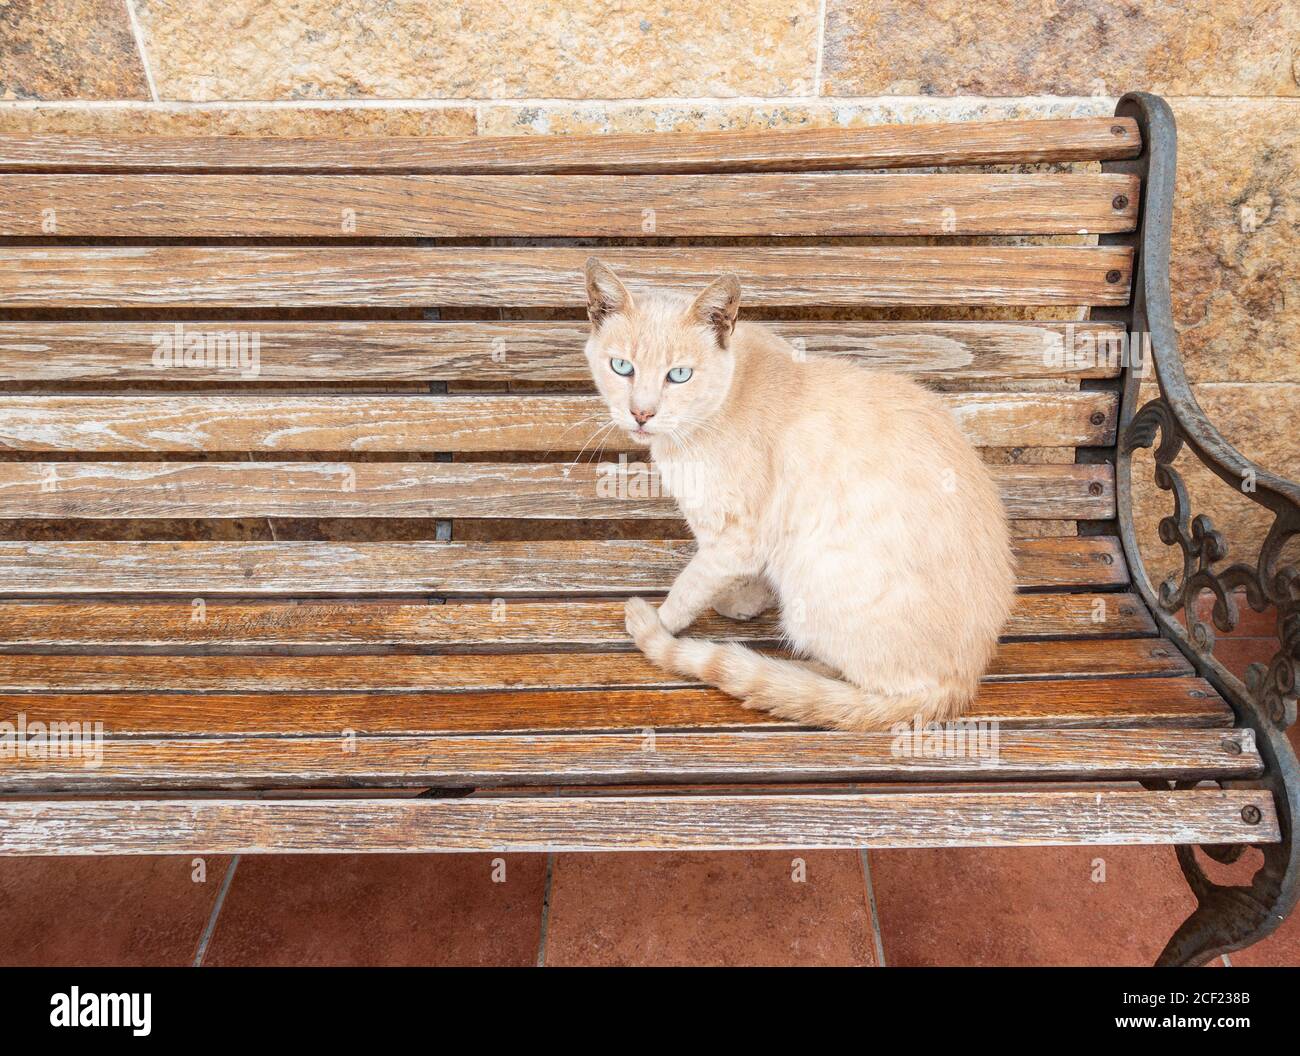 Cat sitting on bench Stock Photo